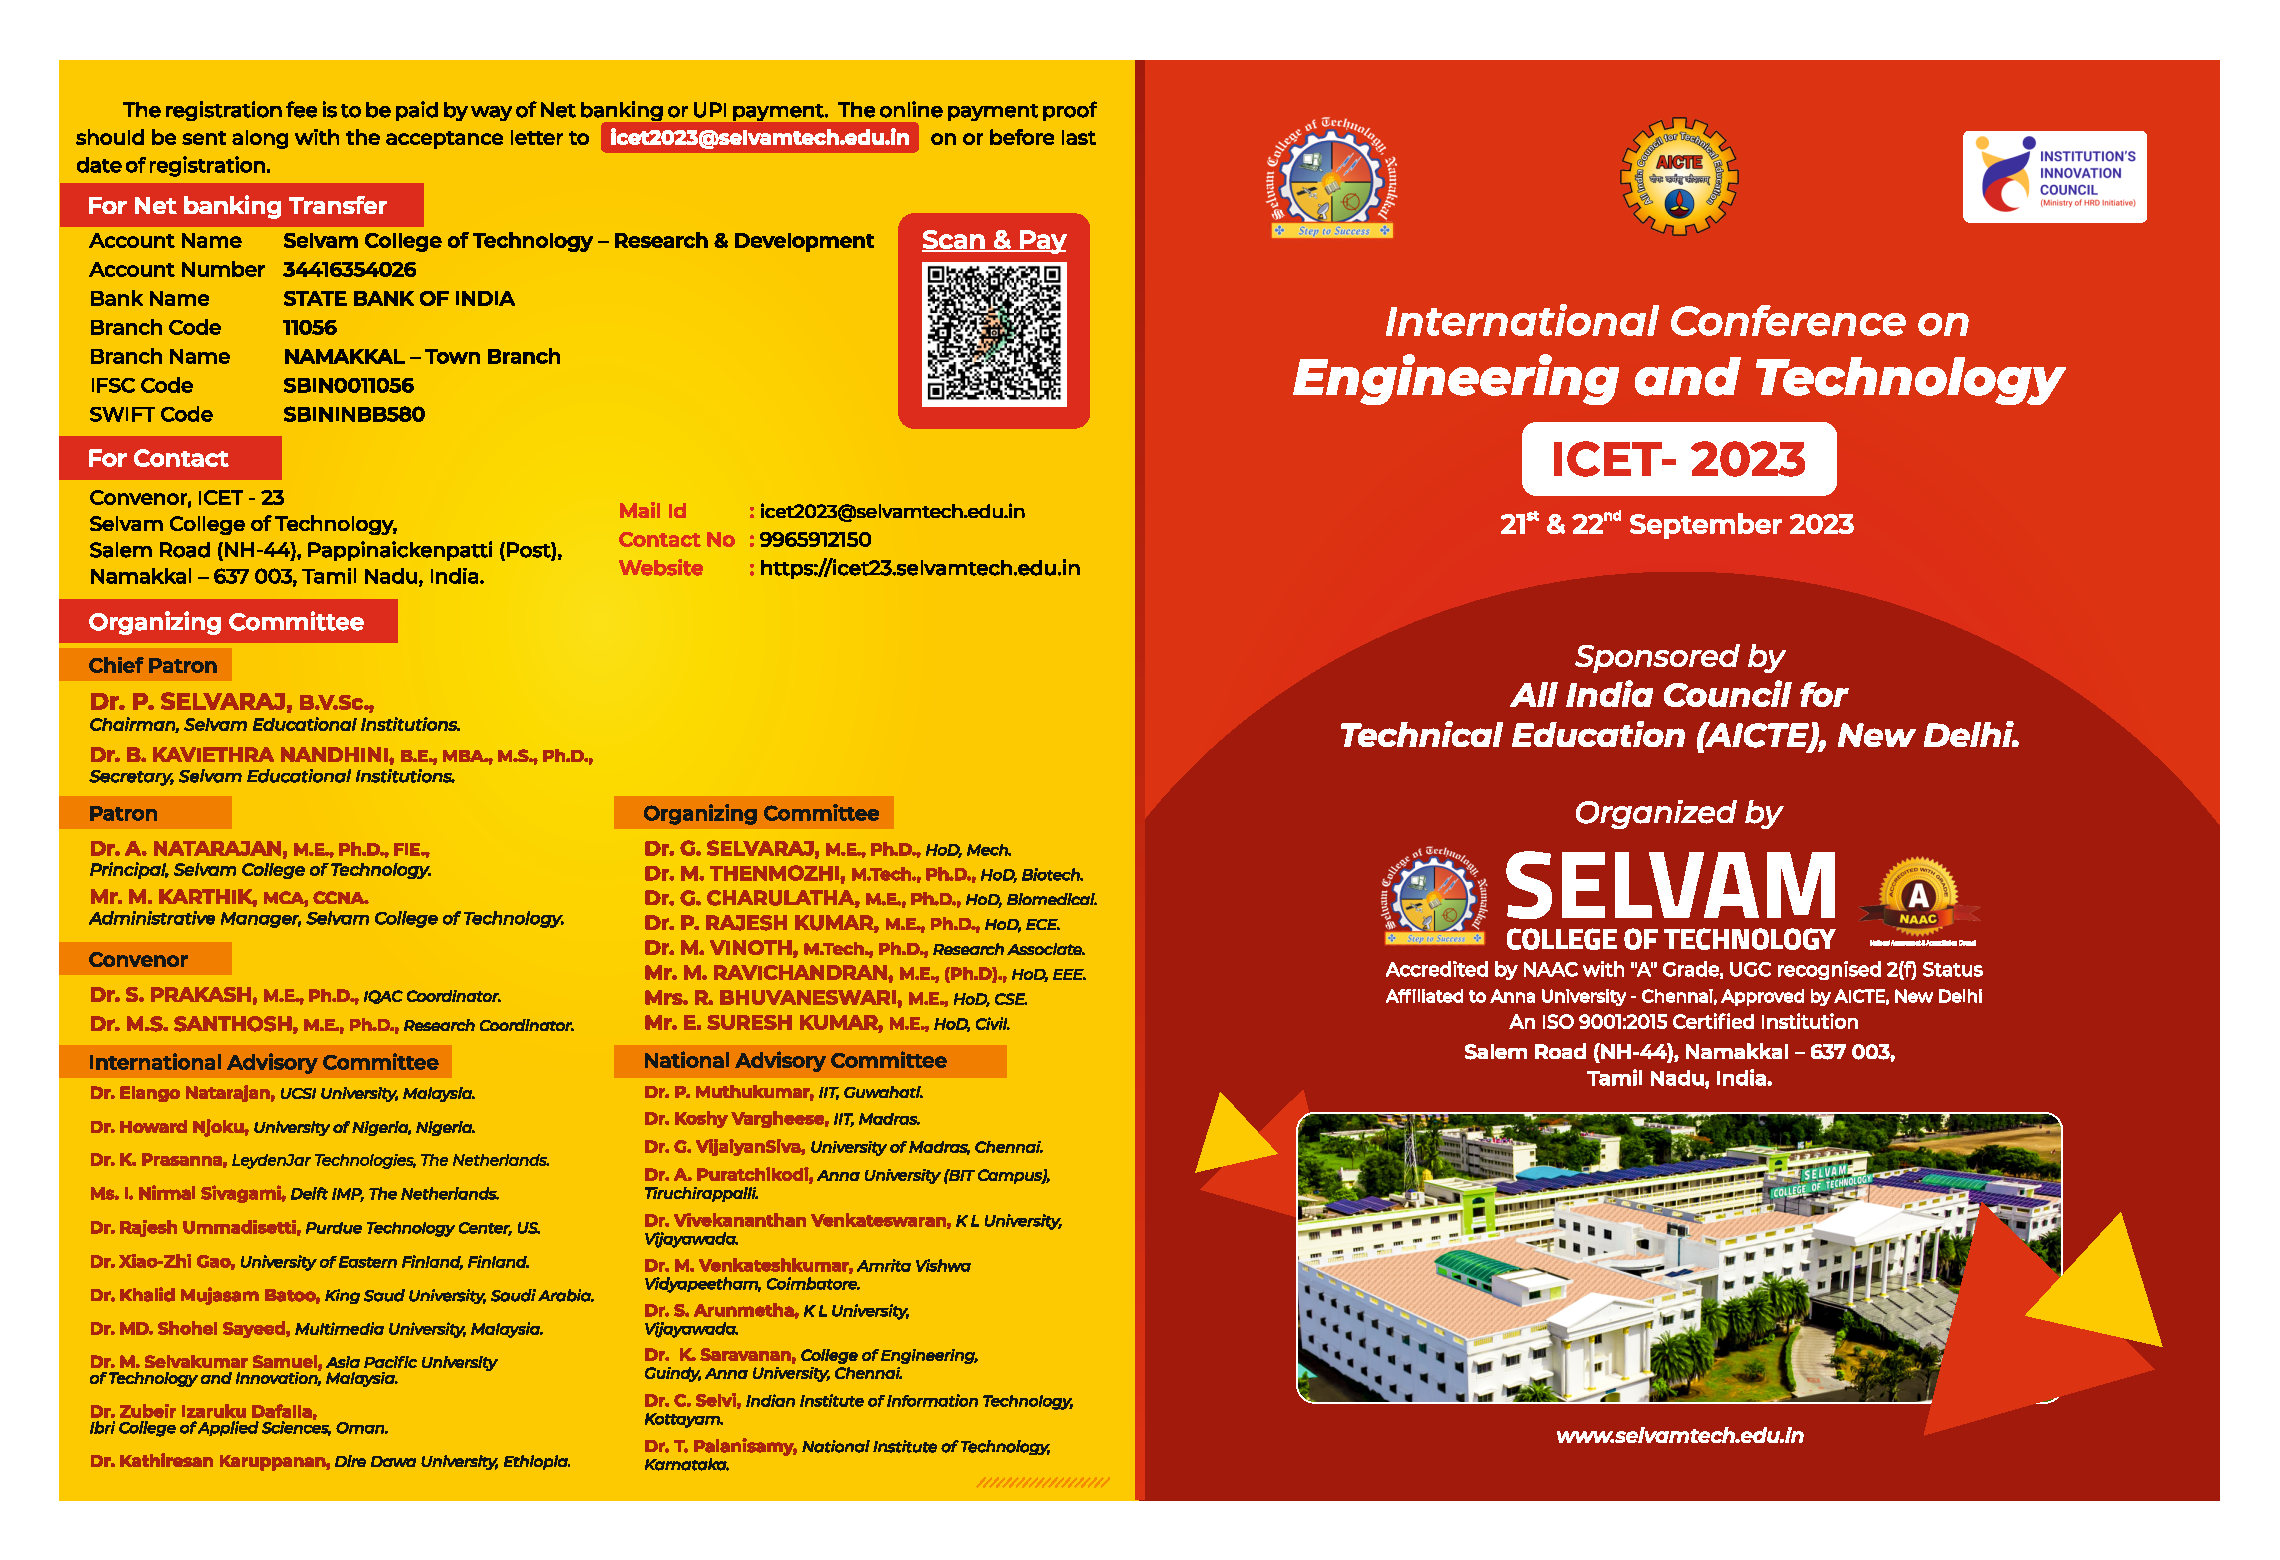 International Conference on Engineering and Technology (ICET- 2023), Namakkal, Tamil Nadu, India